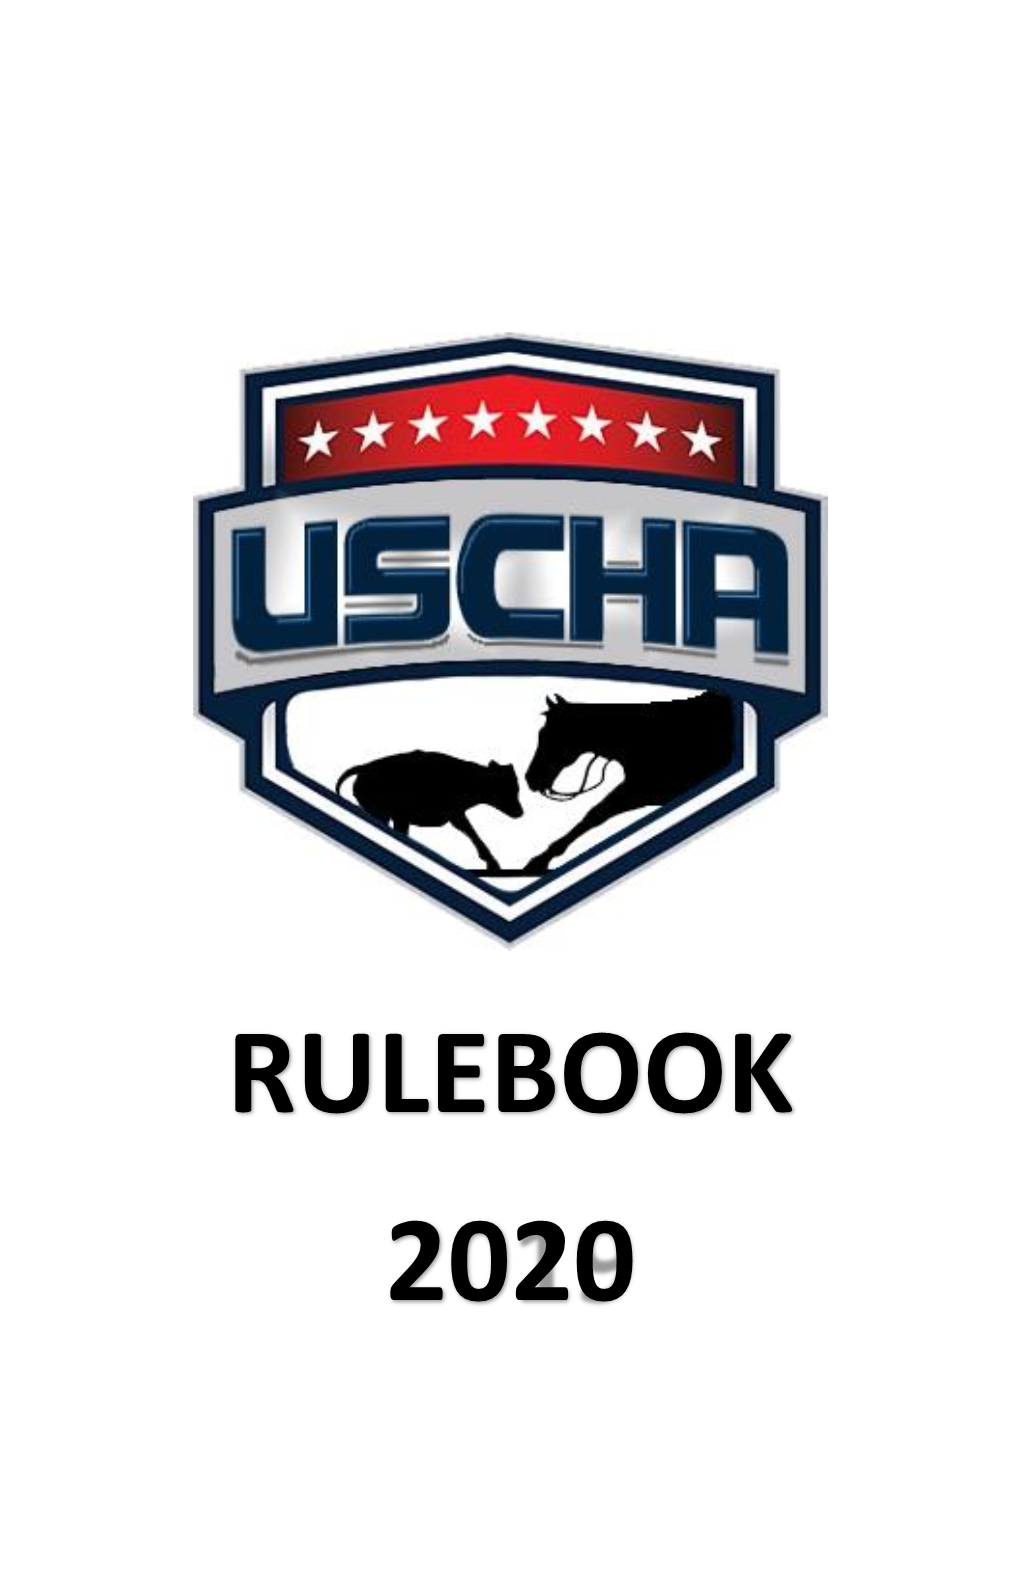 RULEBOOK 2020 United States Cutting Horse Association, LLC